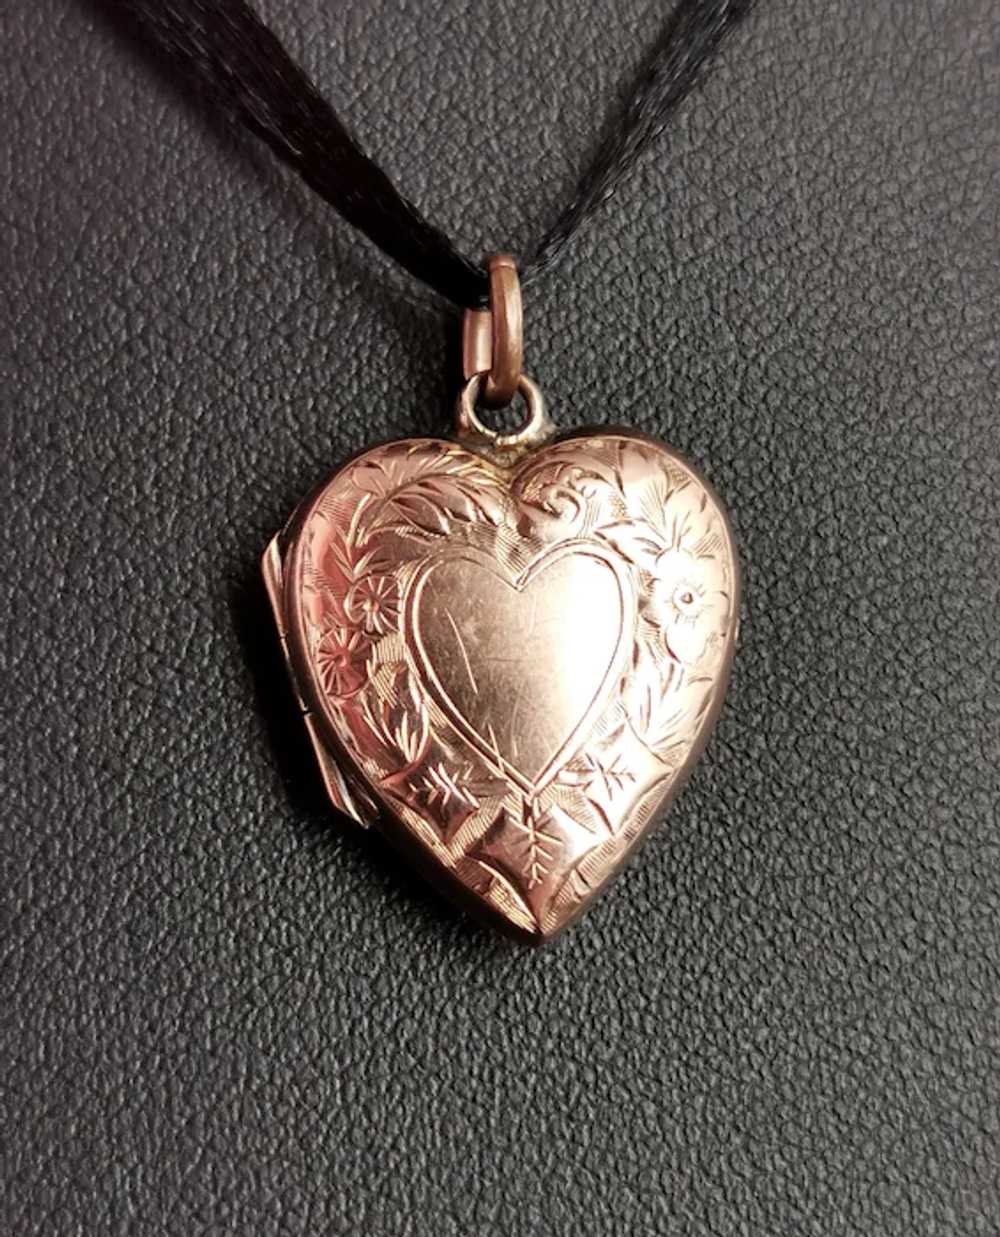 Antique 9k gold Heart shaped locket pendant - image 2